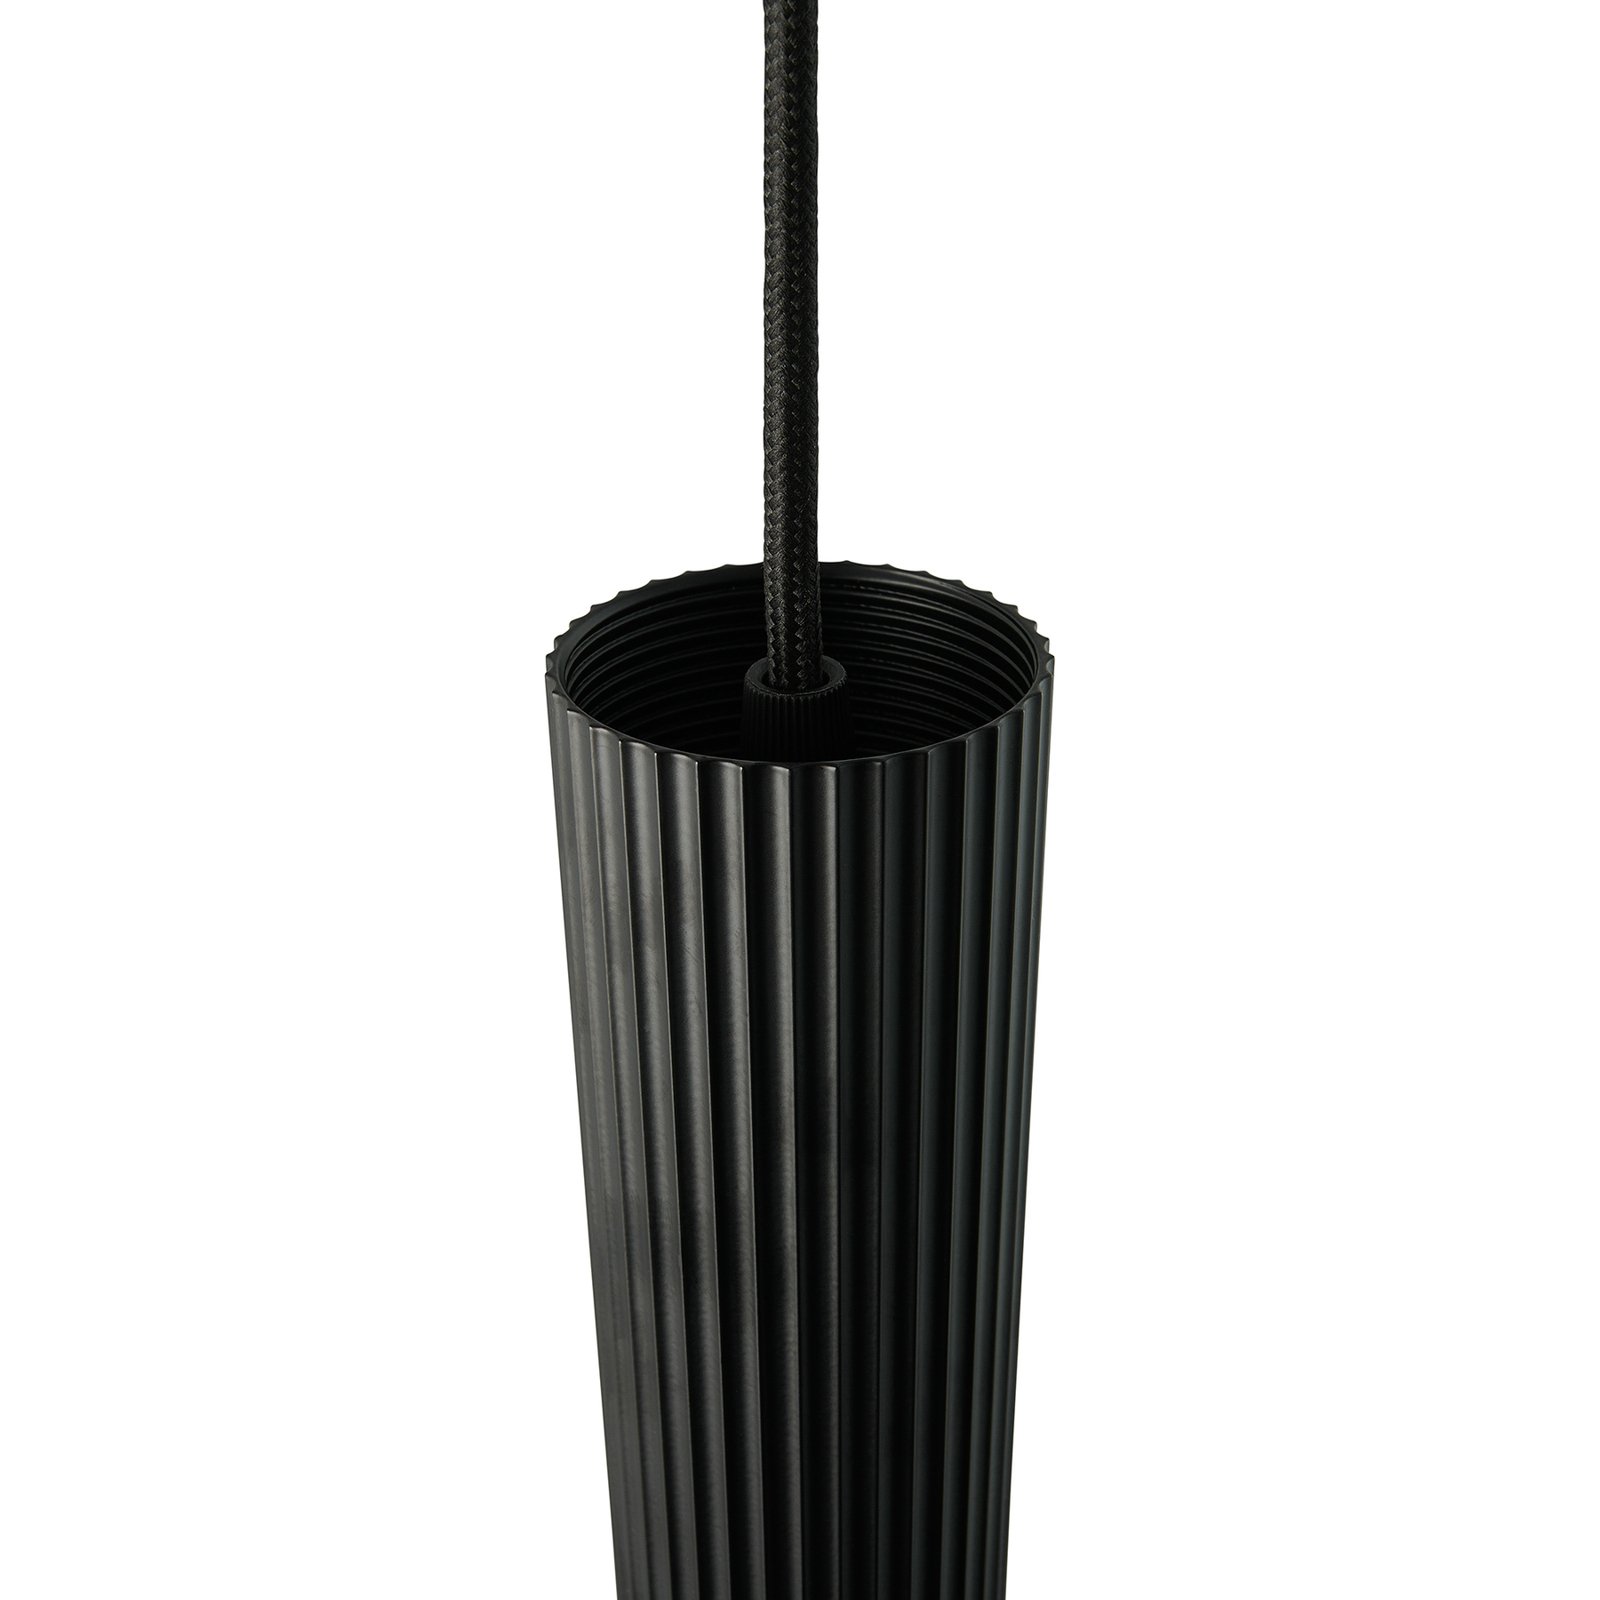 Vico pendant light, metal shade, 1-bulb, black